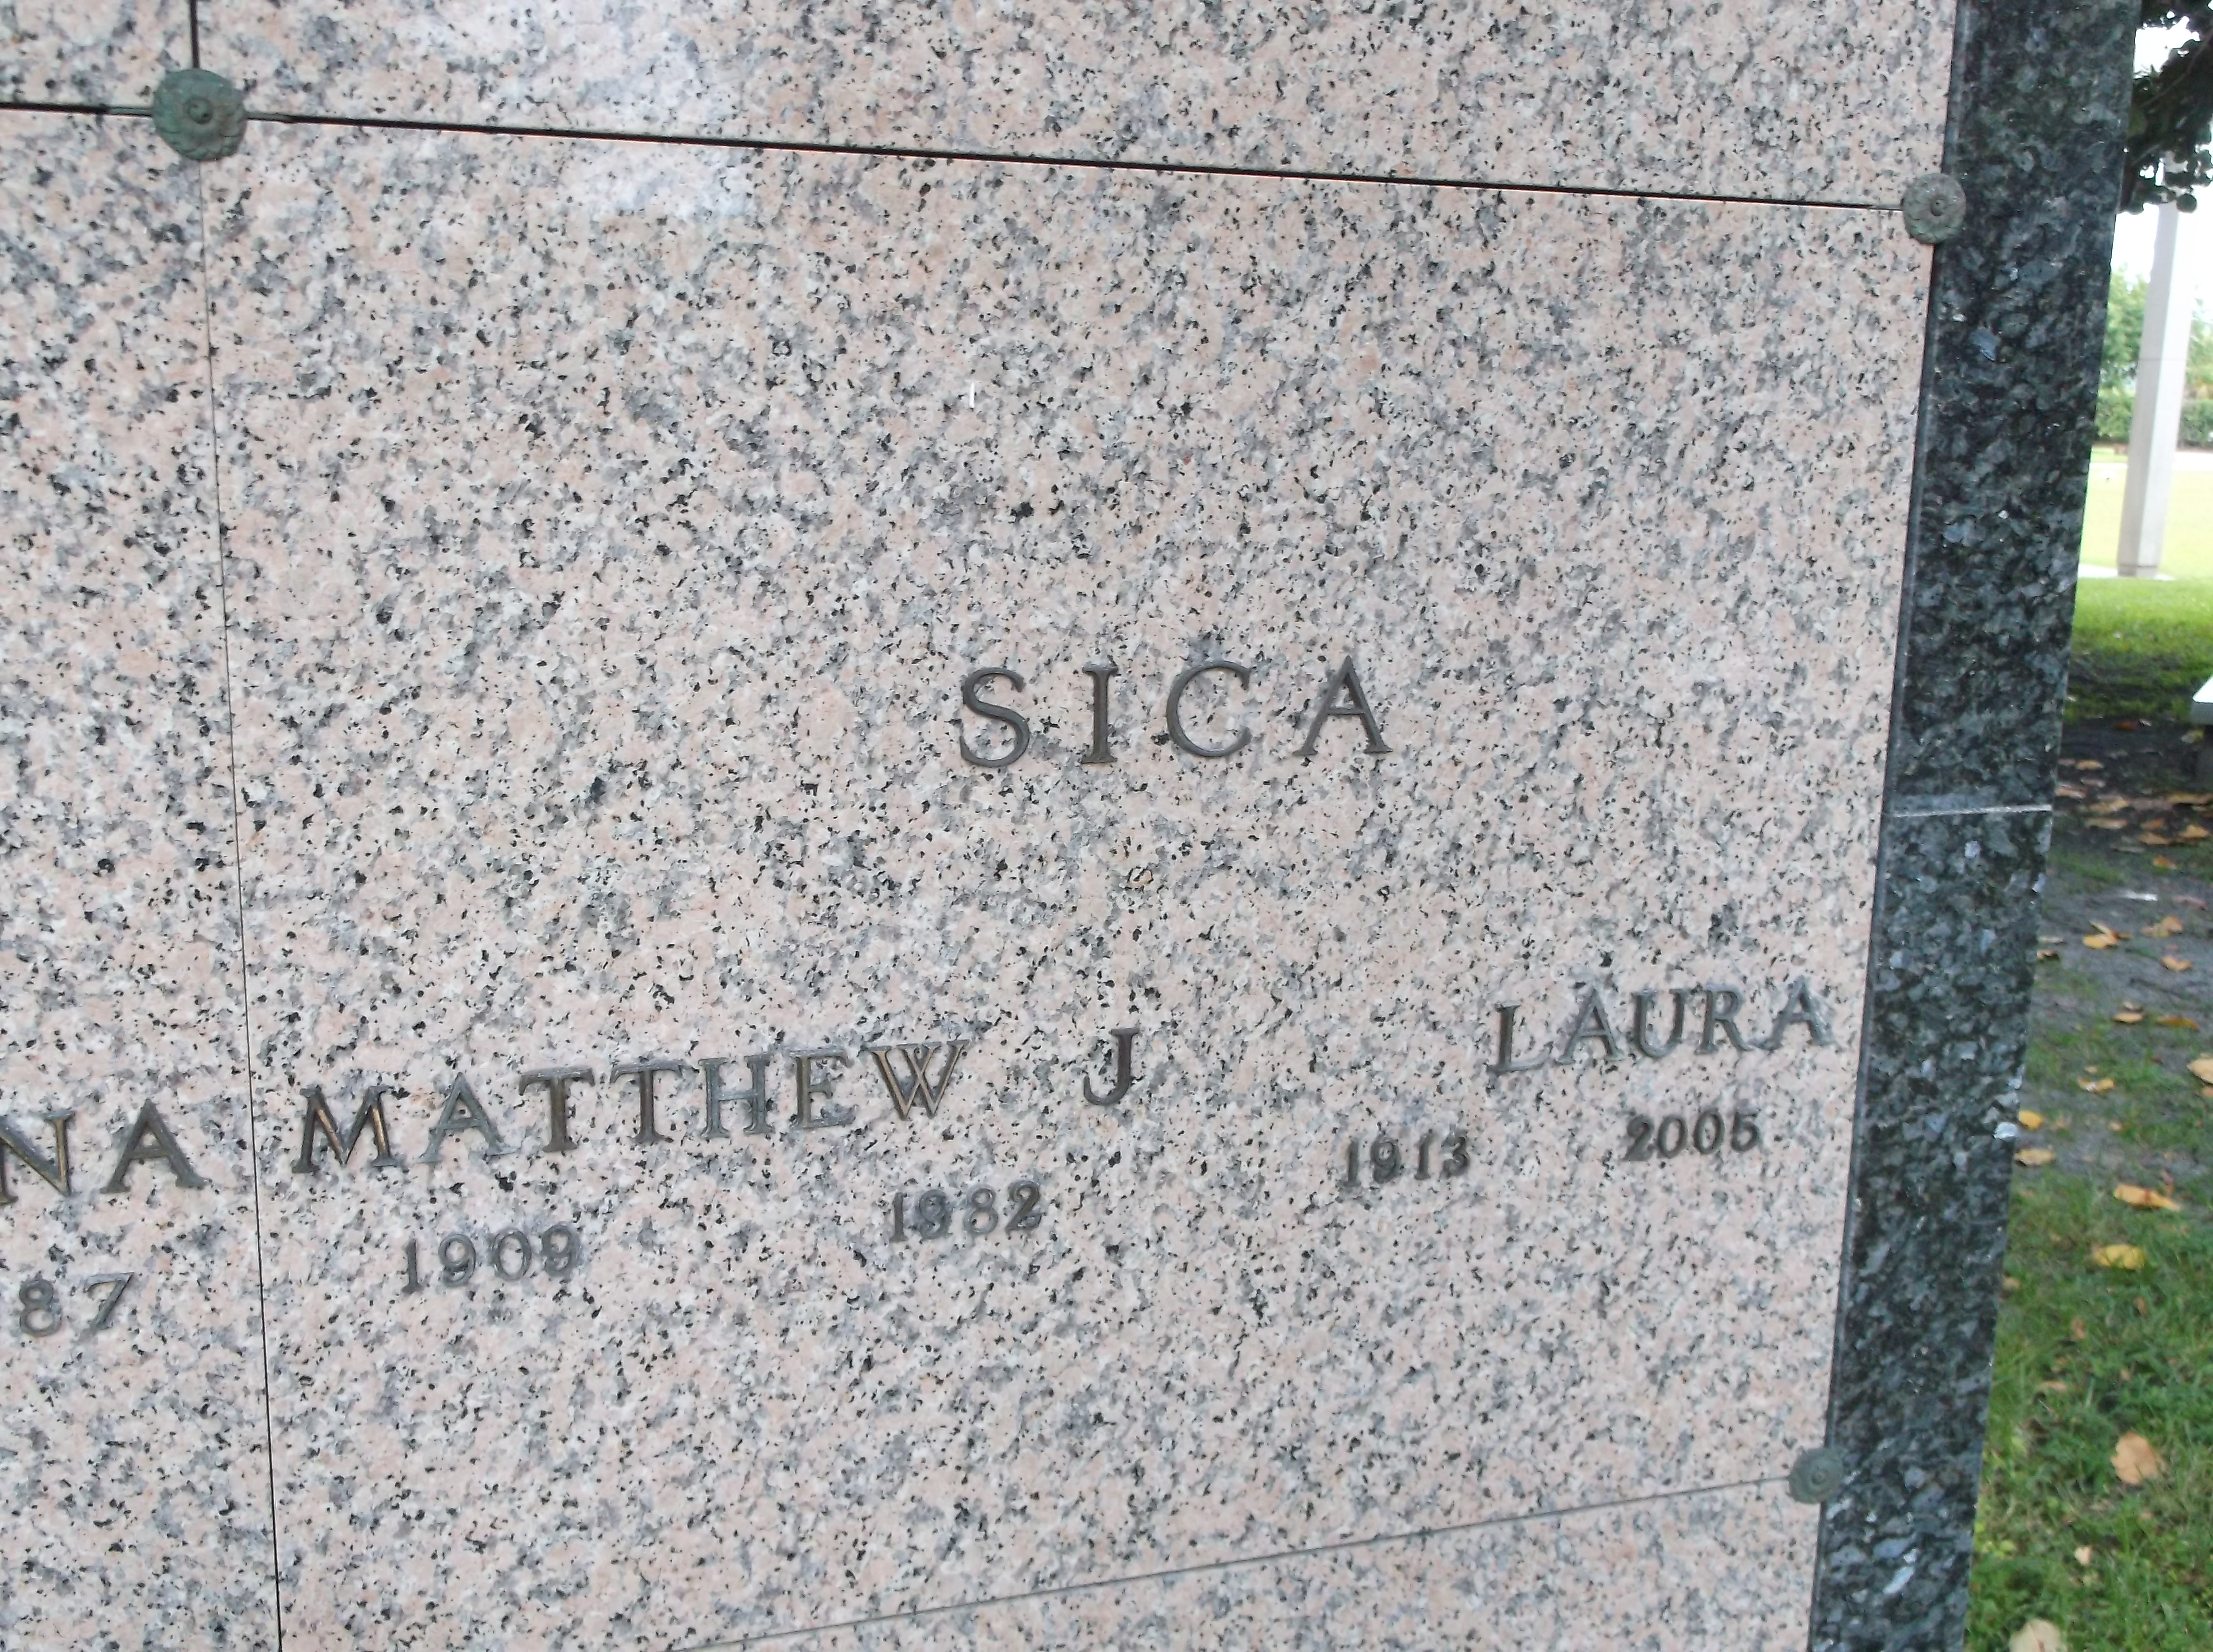 Matthew J Sica